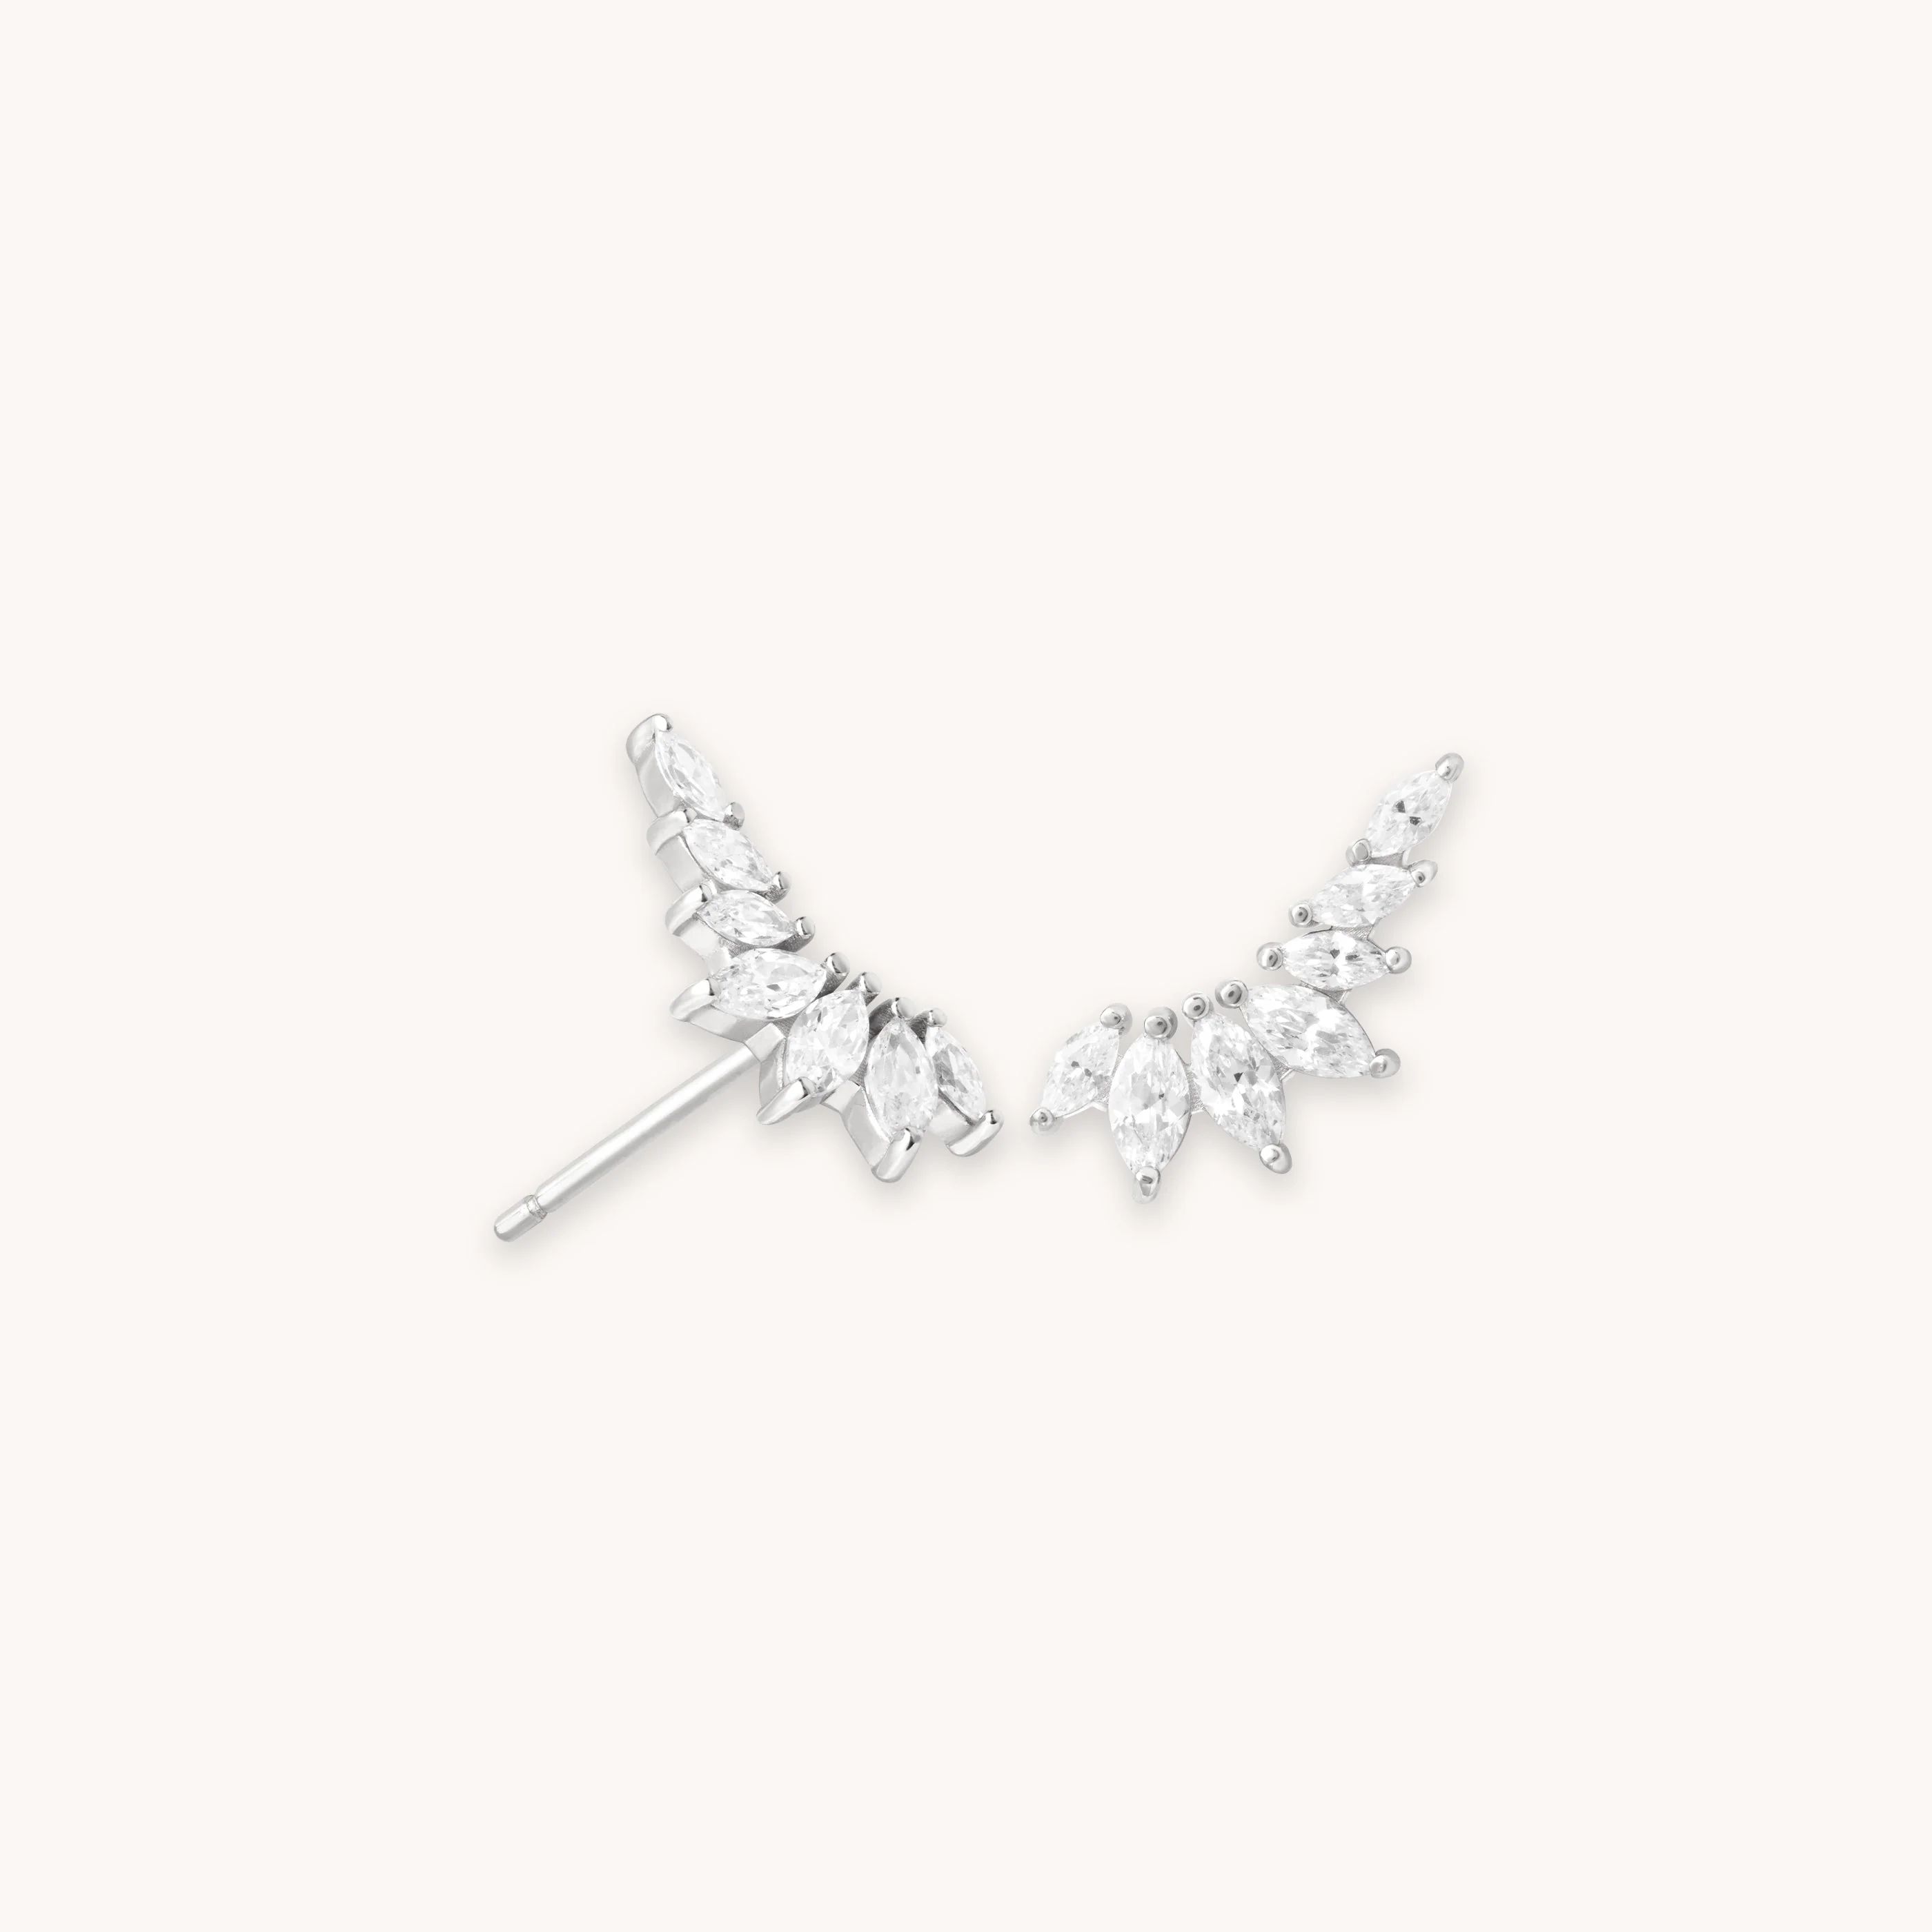 Glimmer Navette Stud Earrings in Silver | Astrid and Miyu